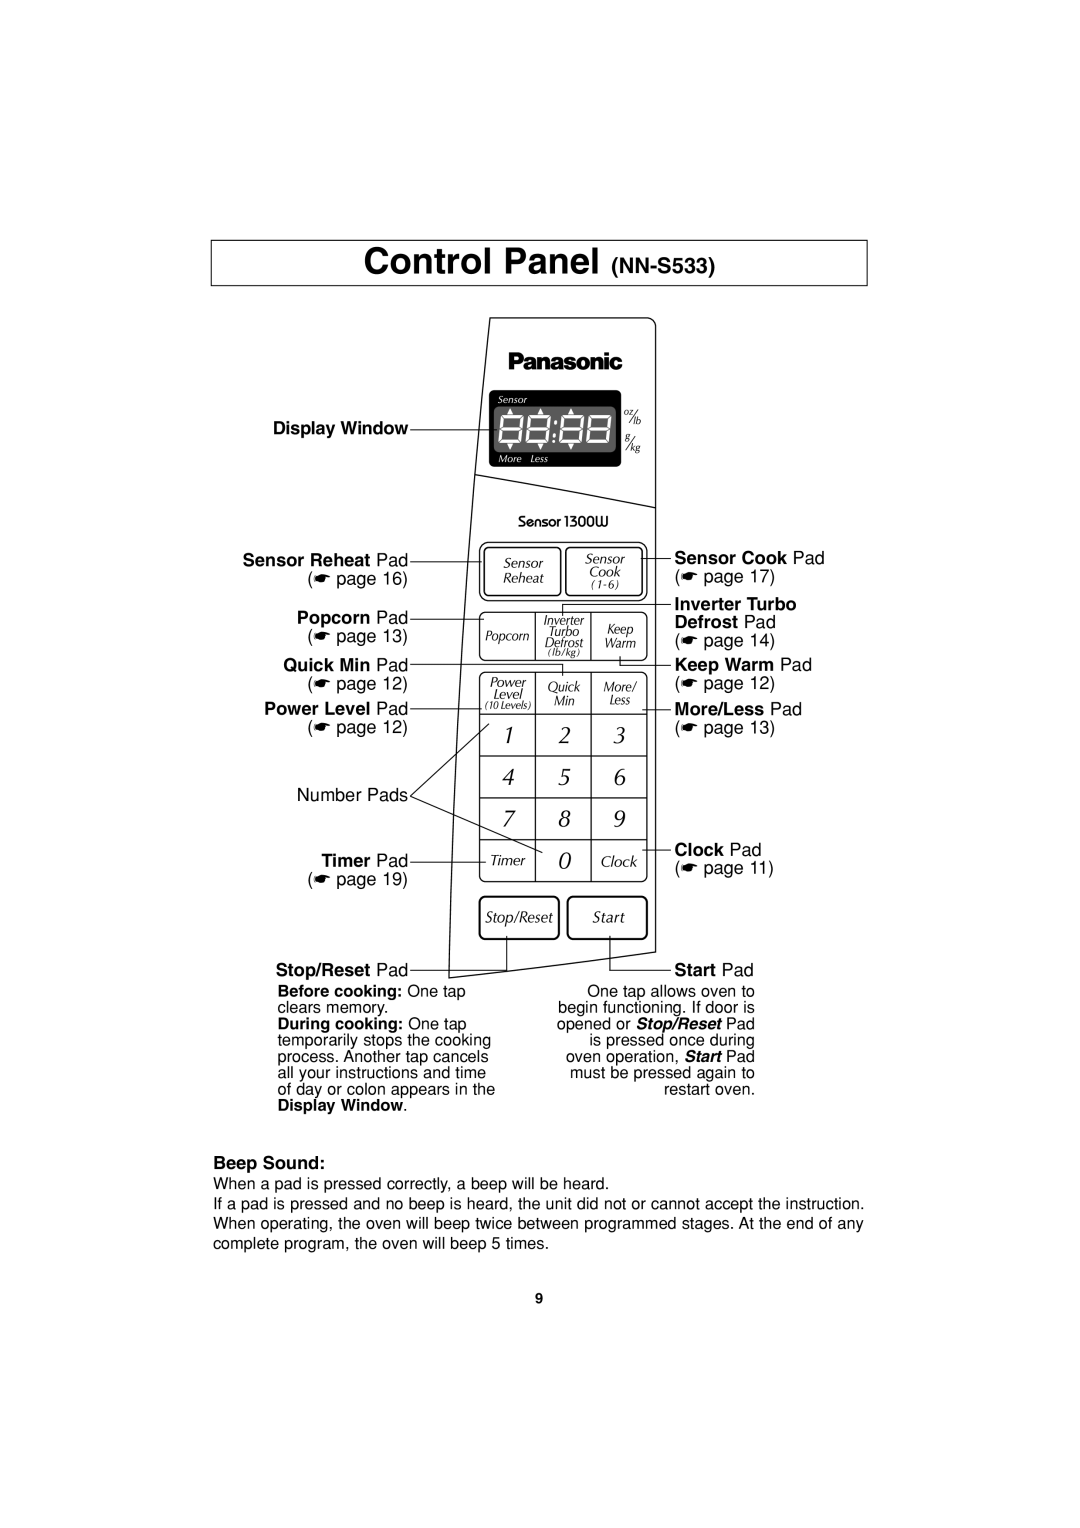 Panasonic NN-S743, NN-S943 important safety instructions Control Panel NN-S533 